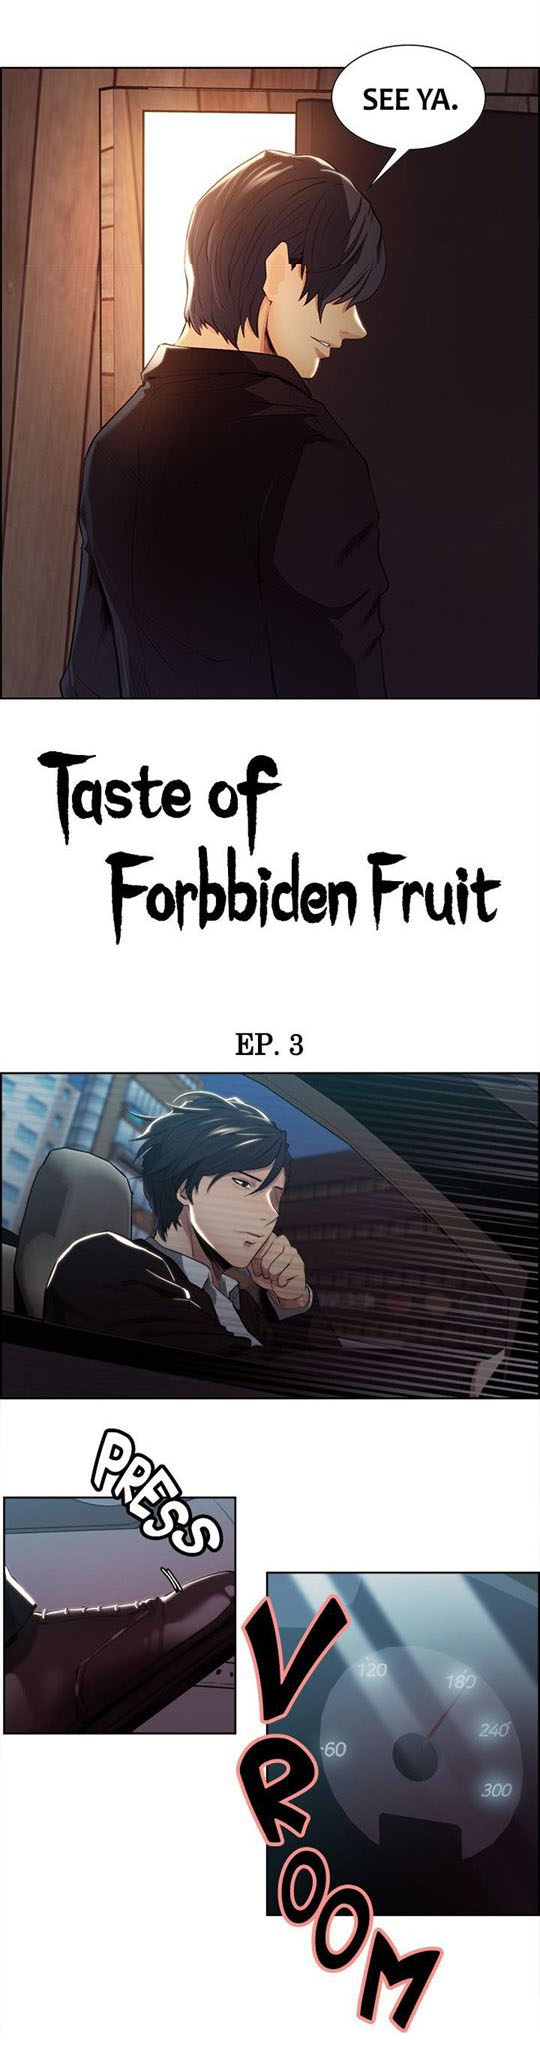 [Serious] Taste of Forbbiden Fruit Ch.6/24